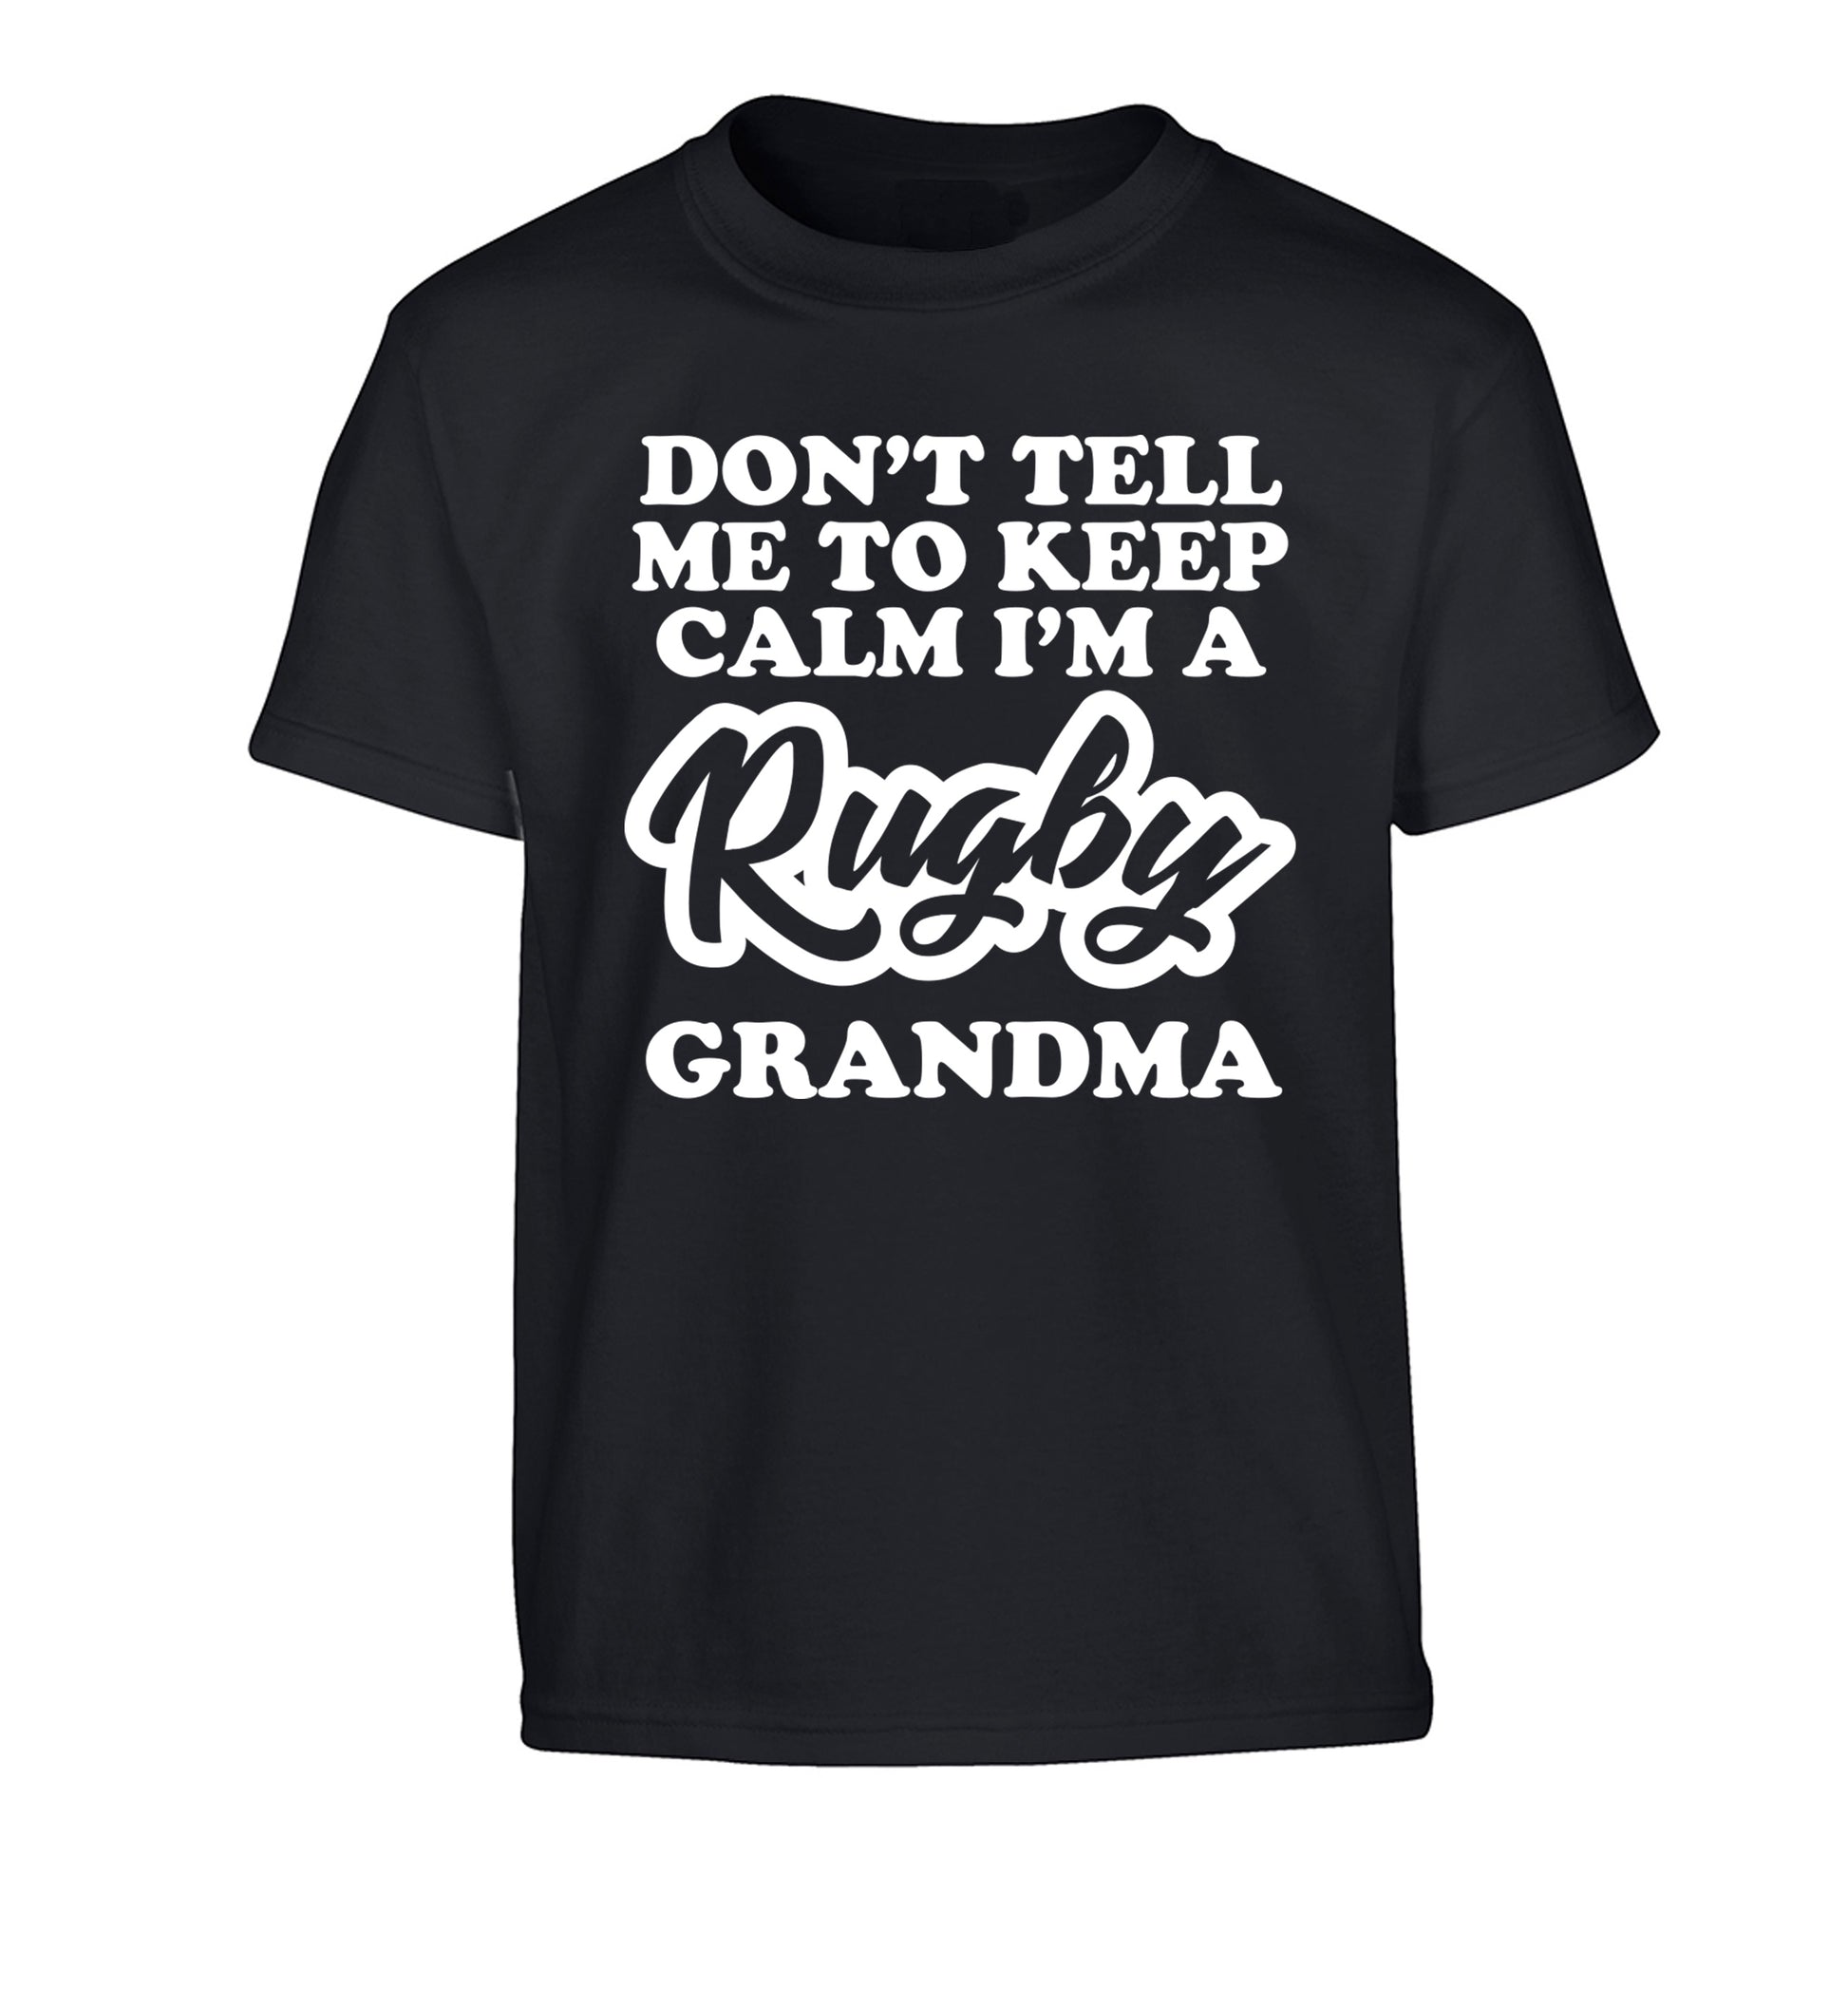 Don't tell me to keep calm I'm a rugby grandma Children's black Tshirt 12-13 Years